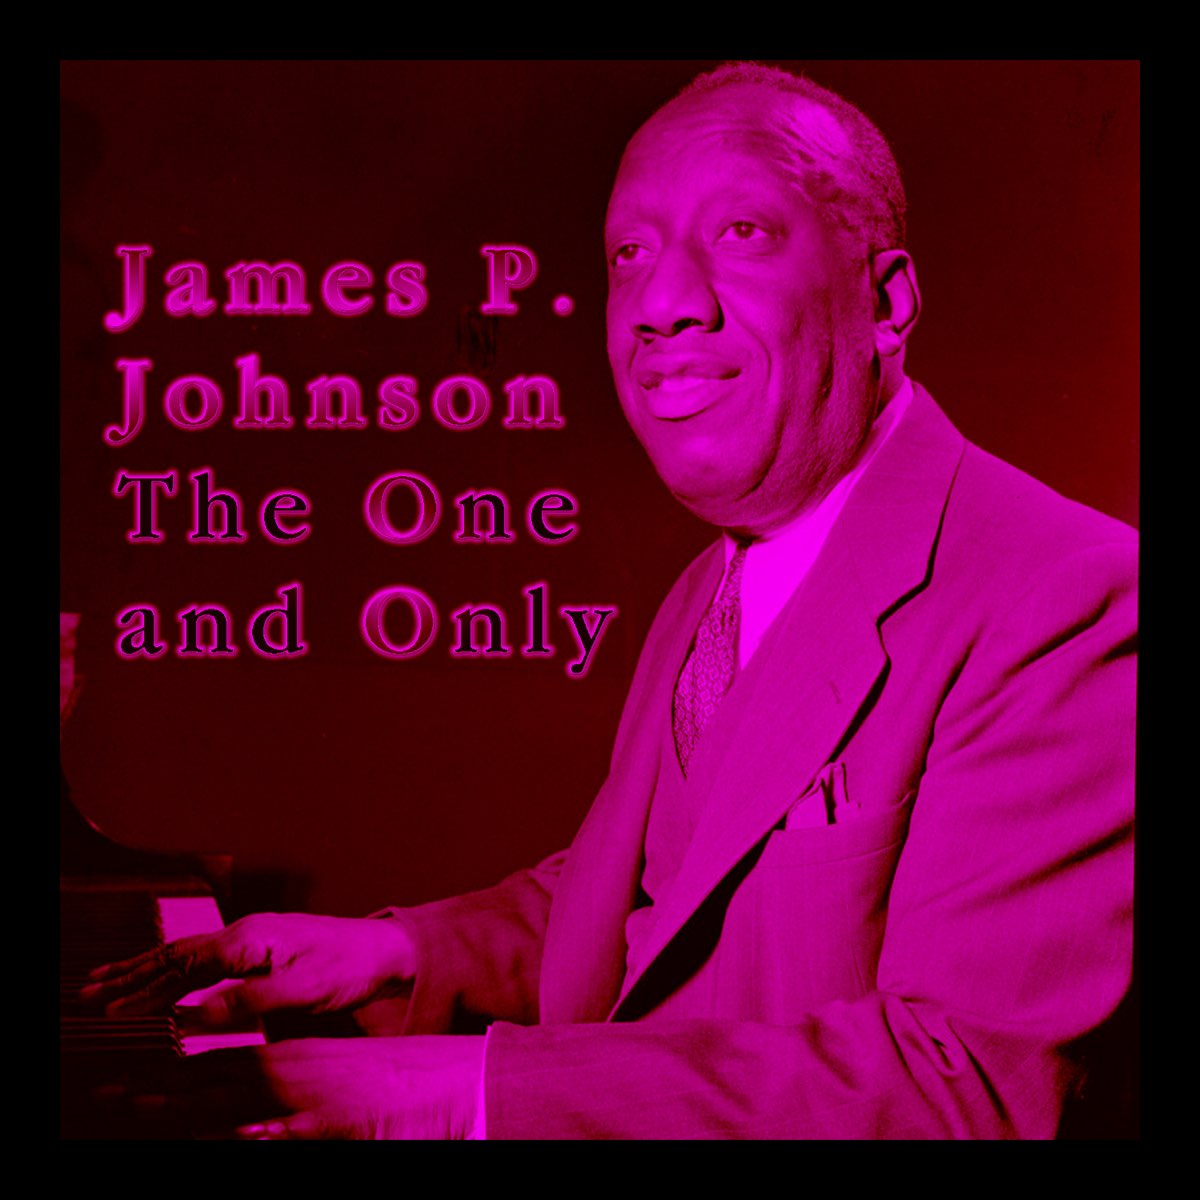 Only james. Xáat James p. Johnson.